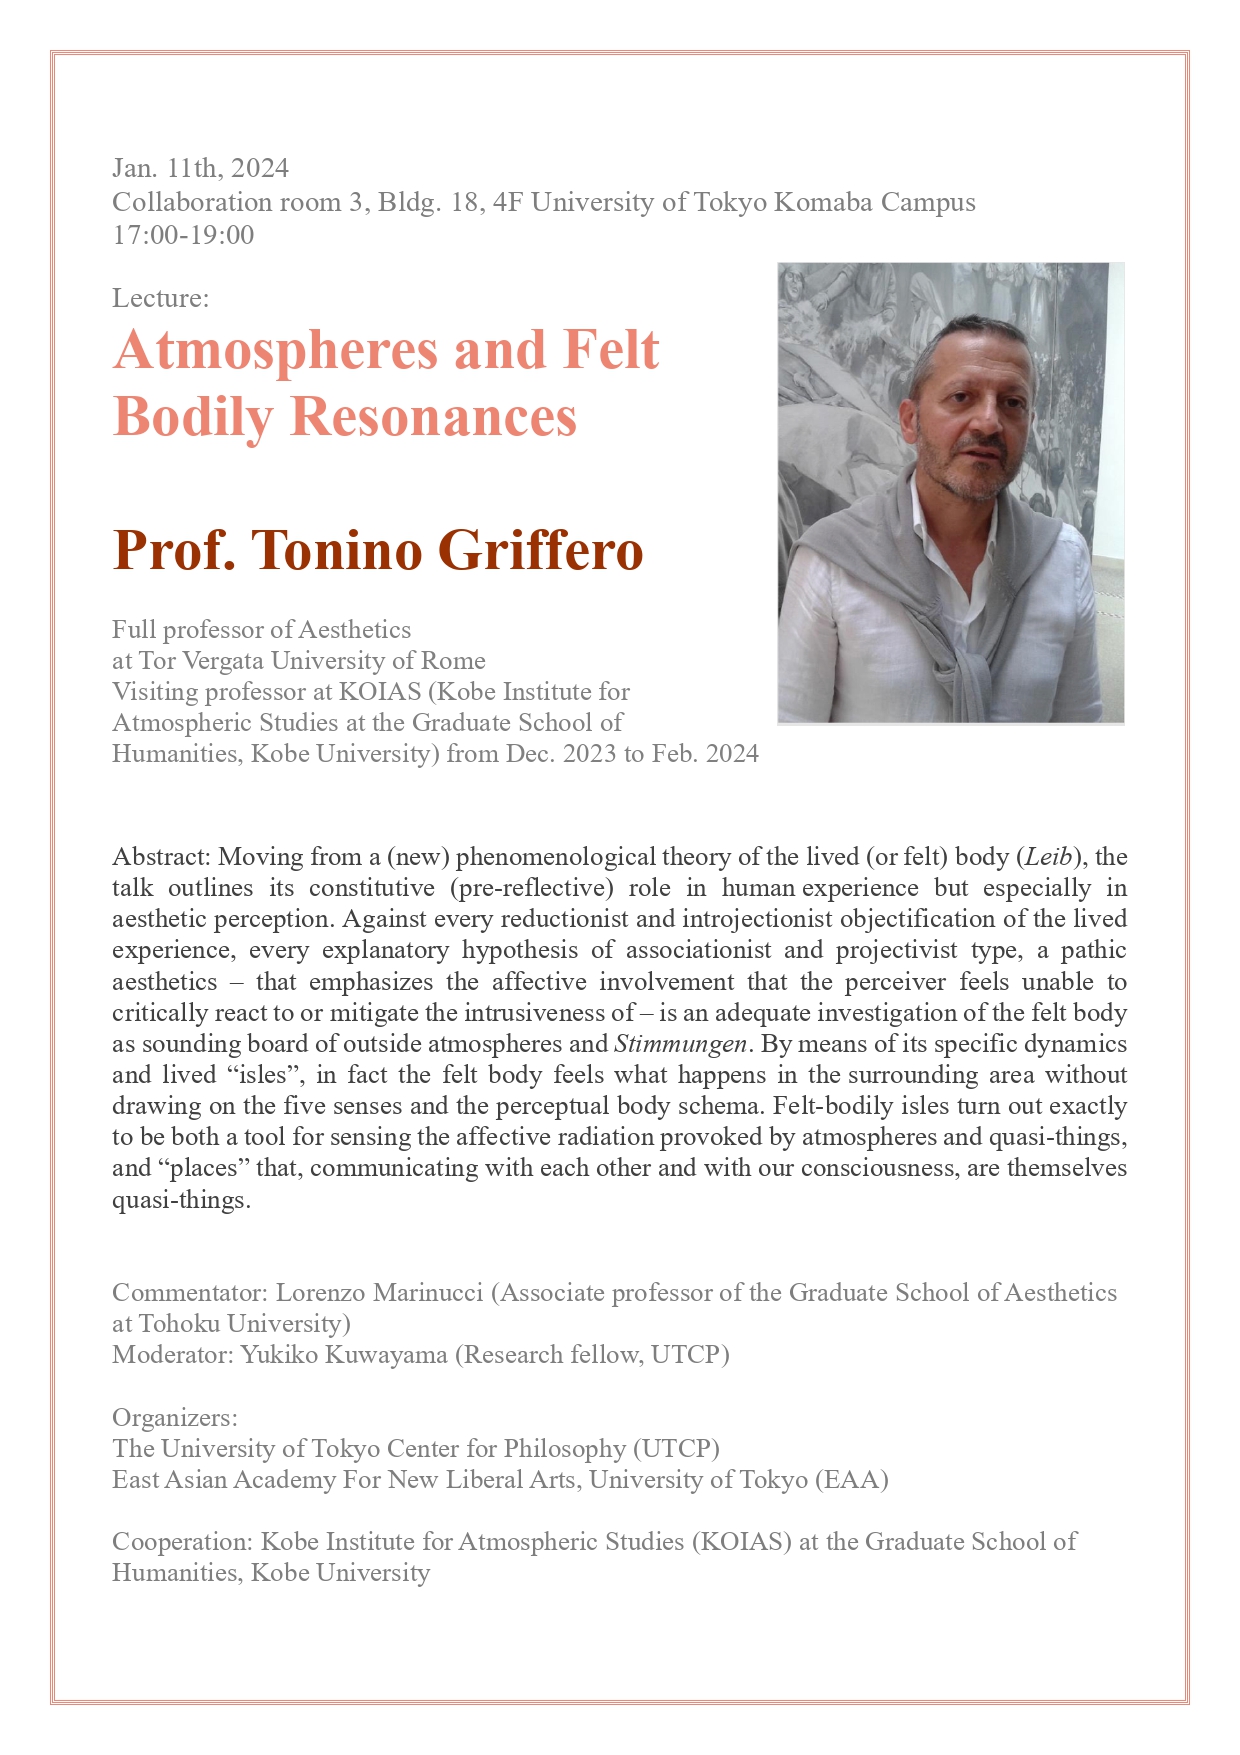 Atmospheres and Felt Bodily Resonances-Prof. Tonino Griffero